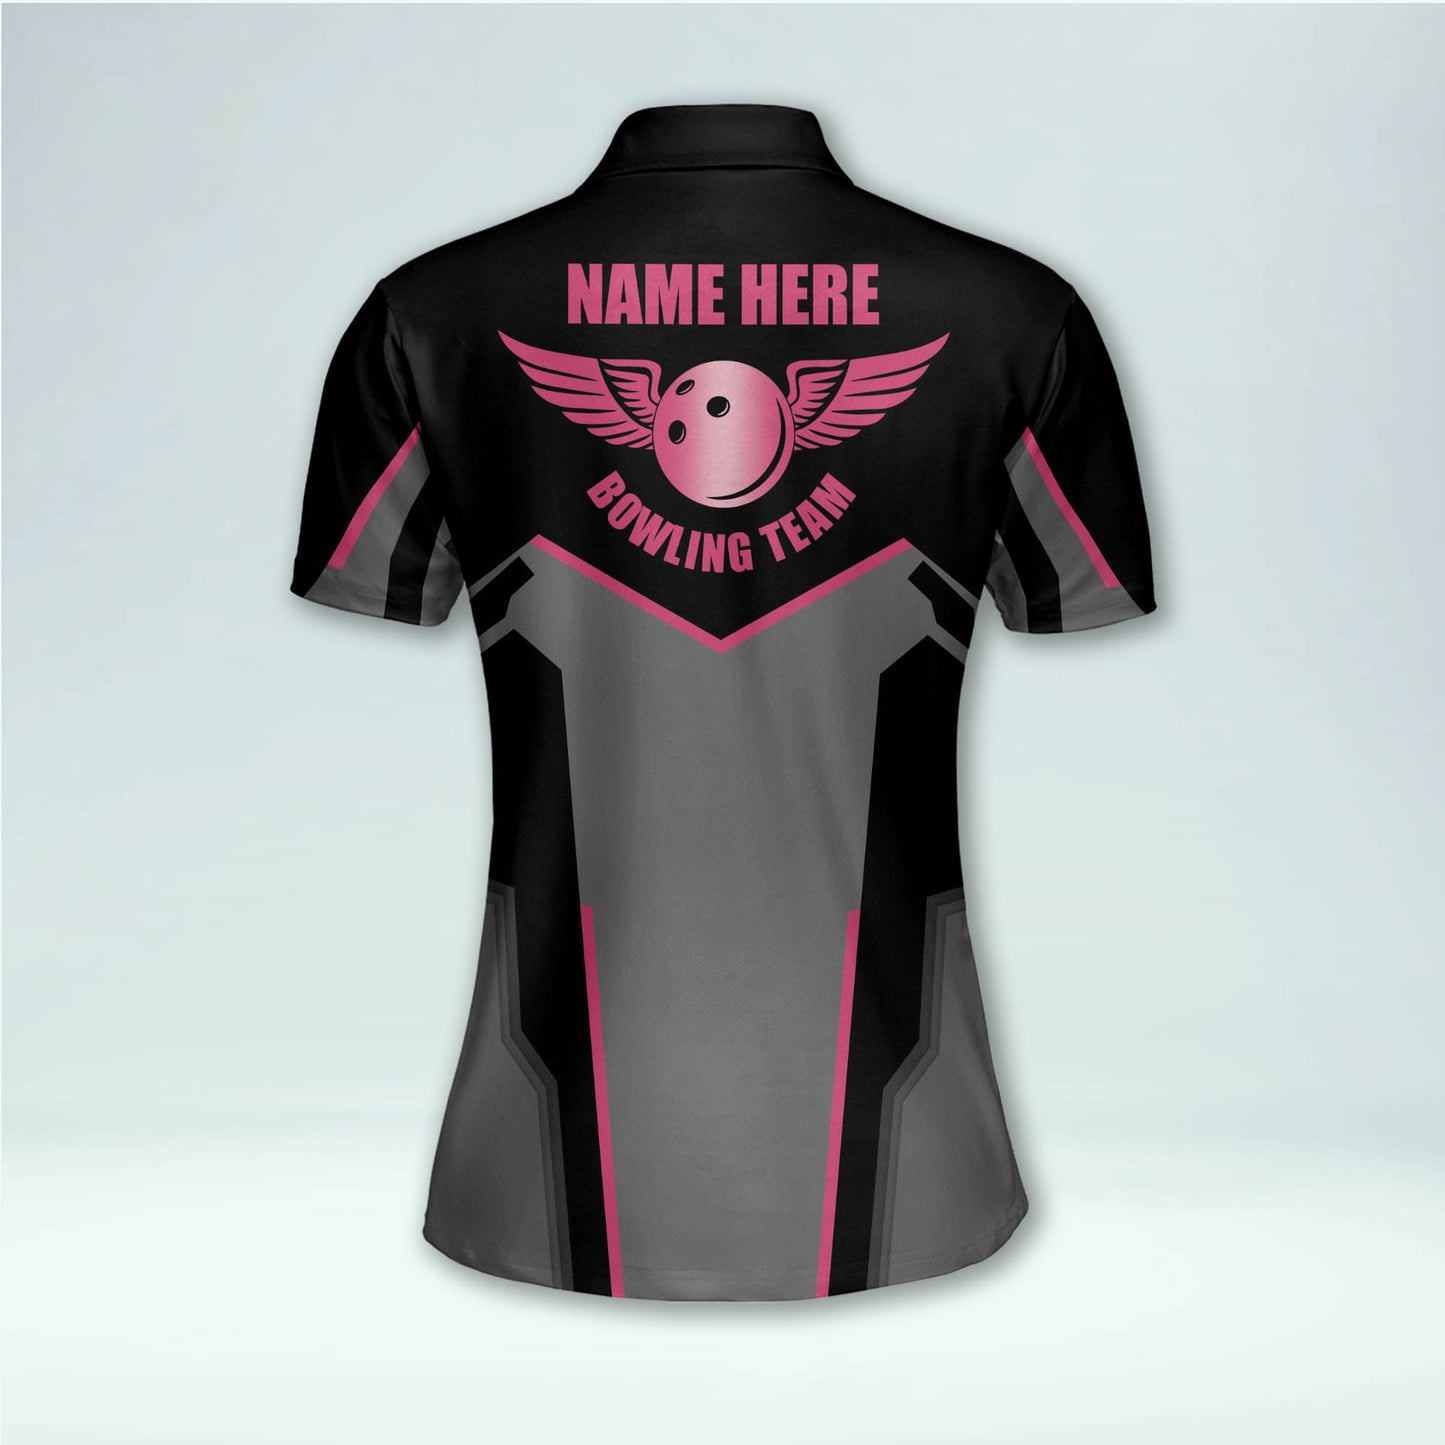 Custom Bowling Shirts For Women - Personalized 3D Pink Funny Bowling Shirts - Women's Bowling Team Shirts - Bowling Jersey With Name For Women BW0075